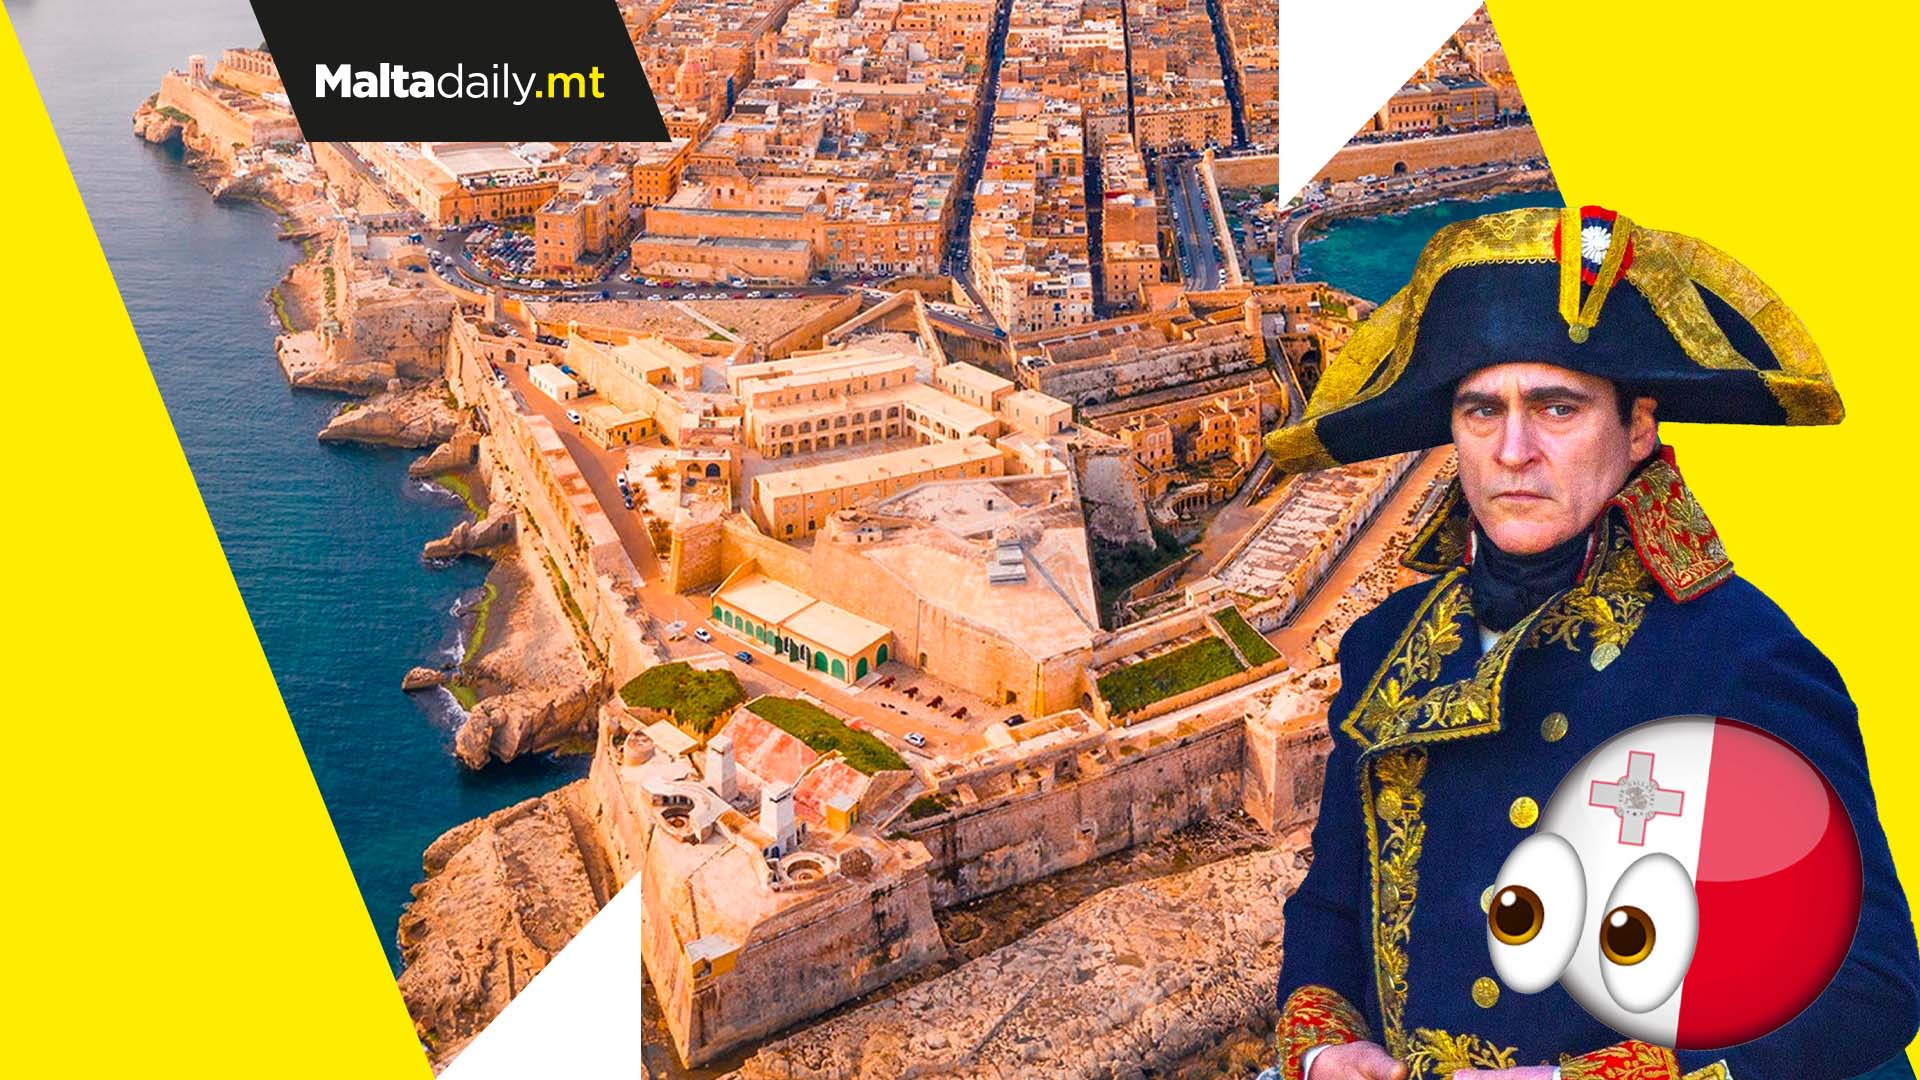 Gladiator star Joaquin Phoenix to film ‘Napoleon’ in Malta next week